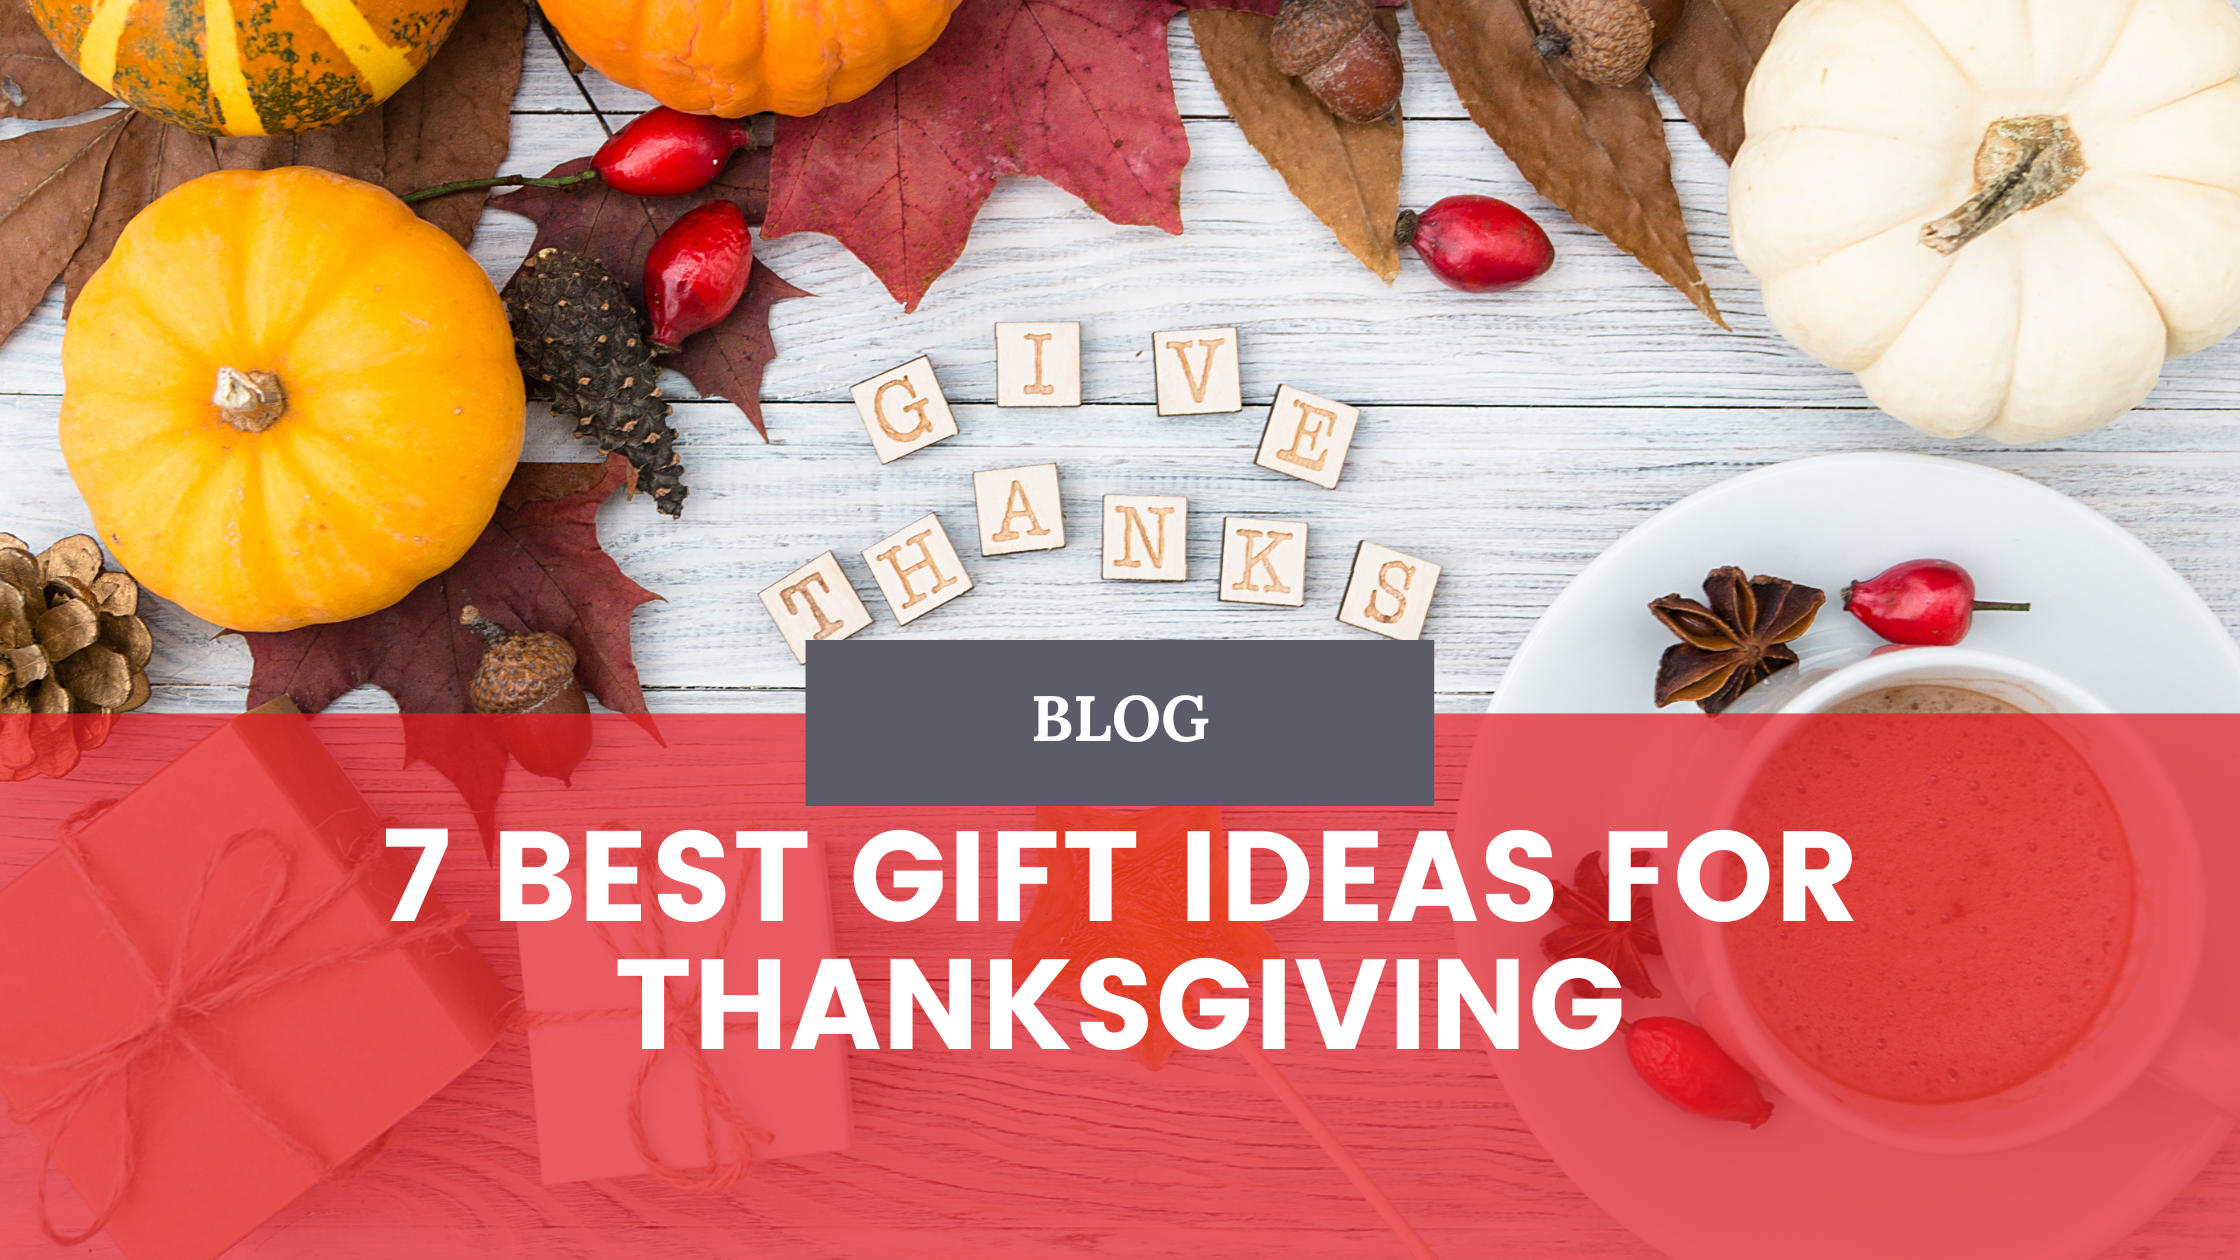 7 Best Gift Ideas for Thanksgiving